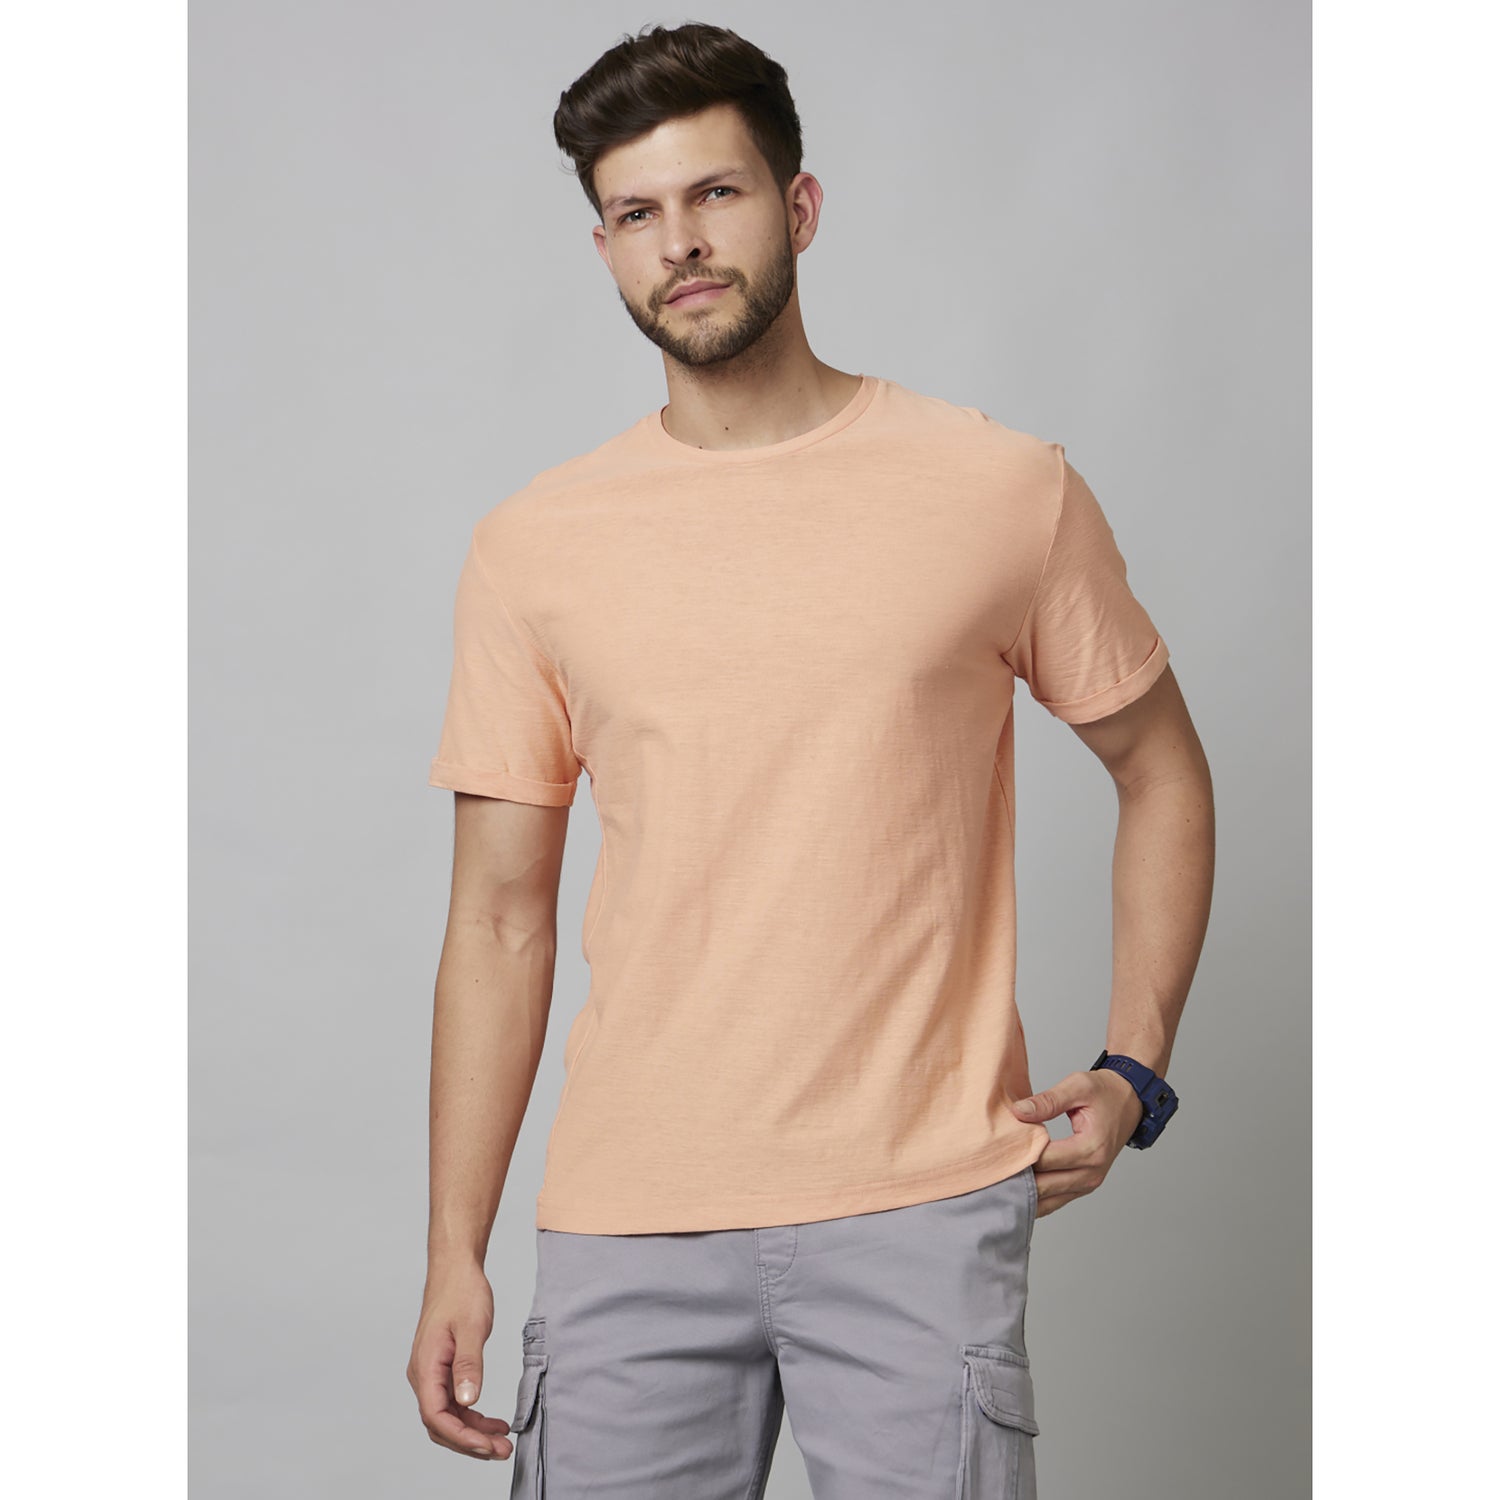 Peach Solid Half Sleeve Cotton T-Shirts (FECOLA)